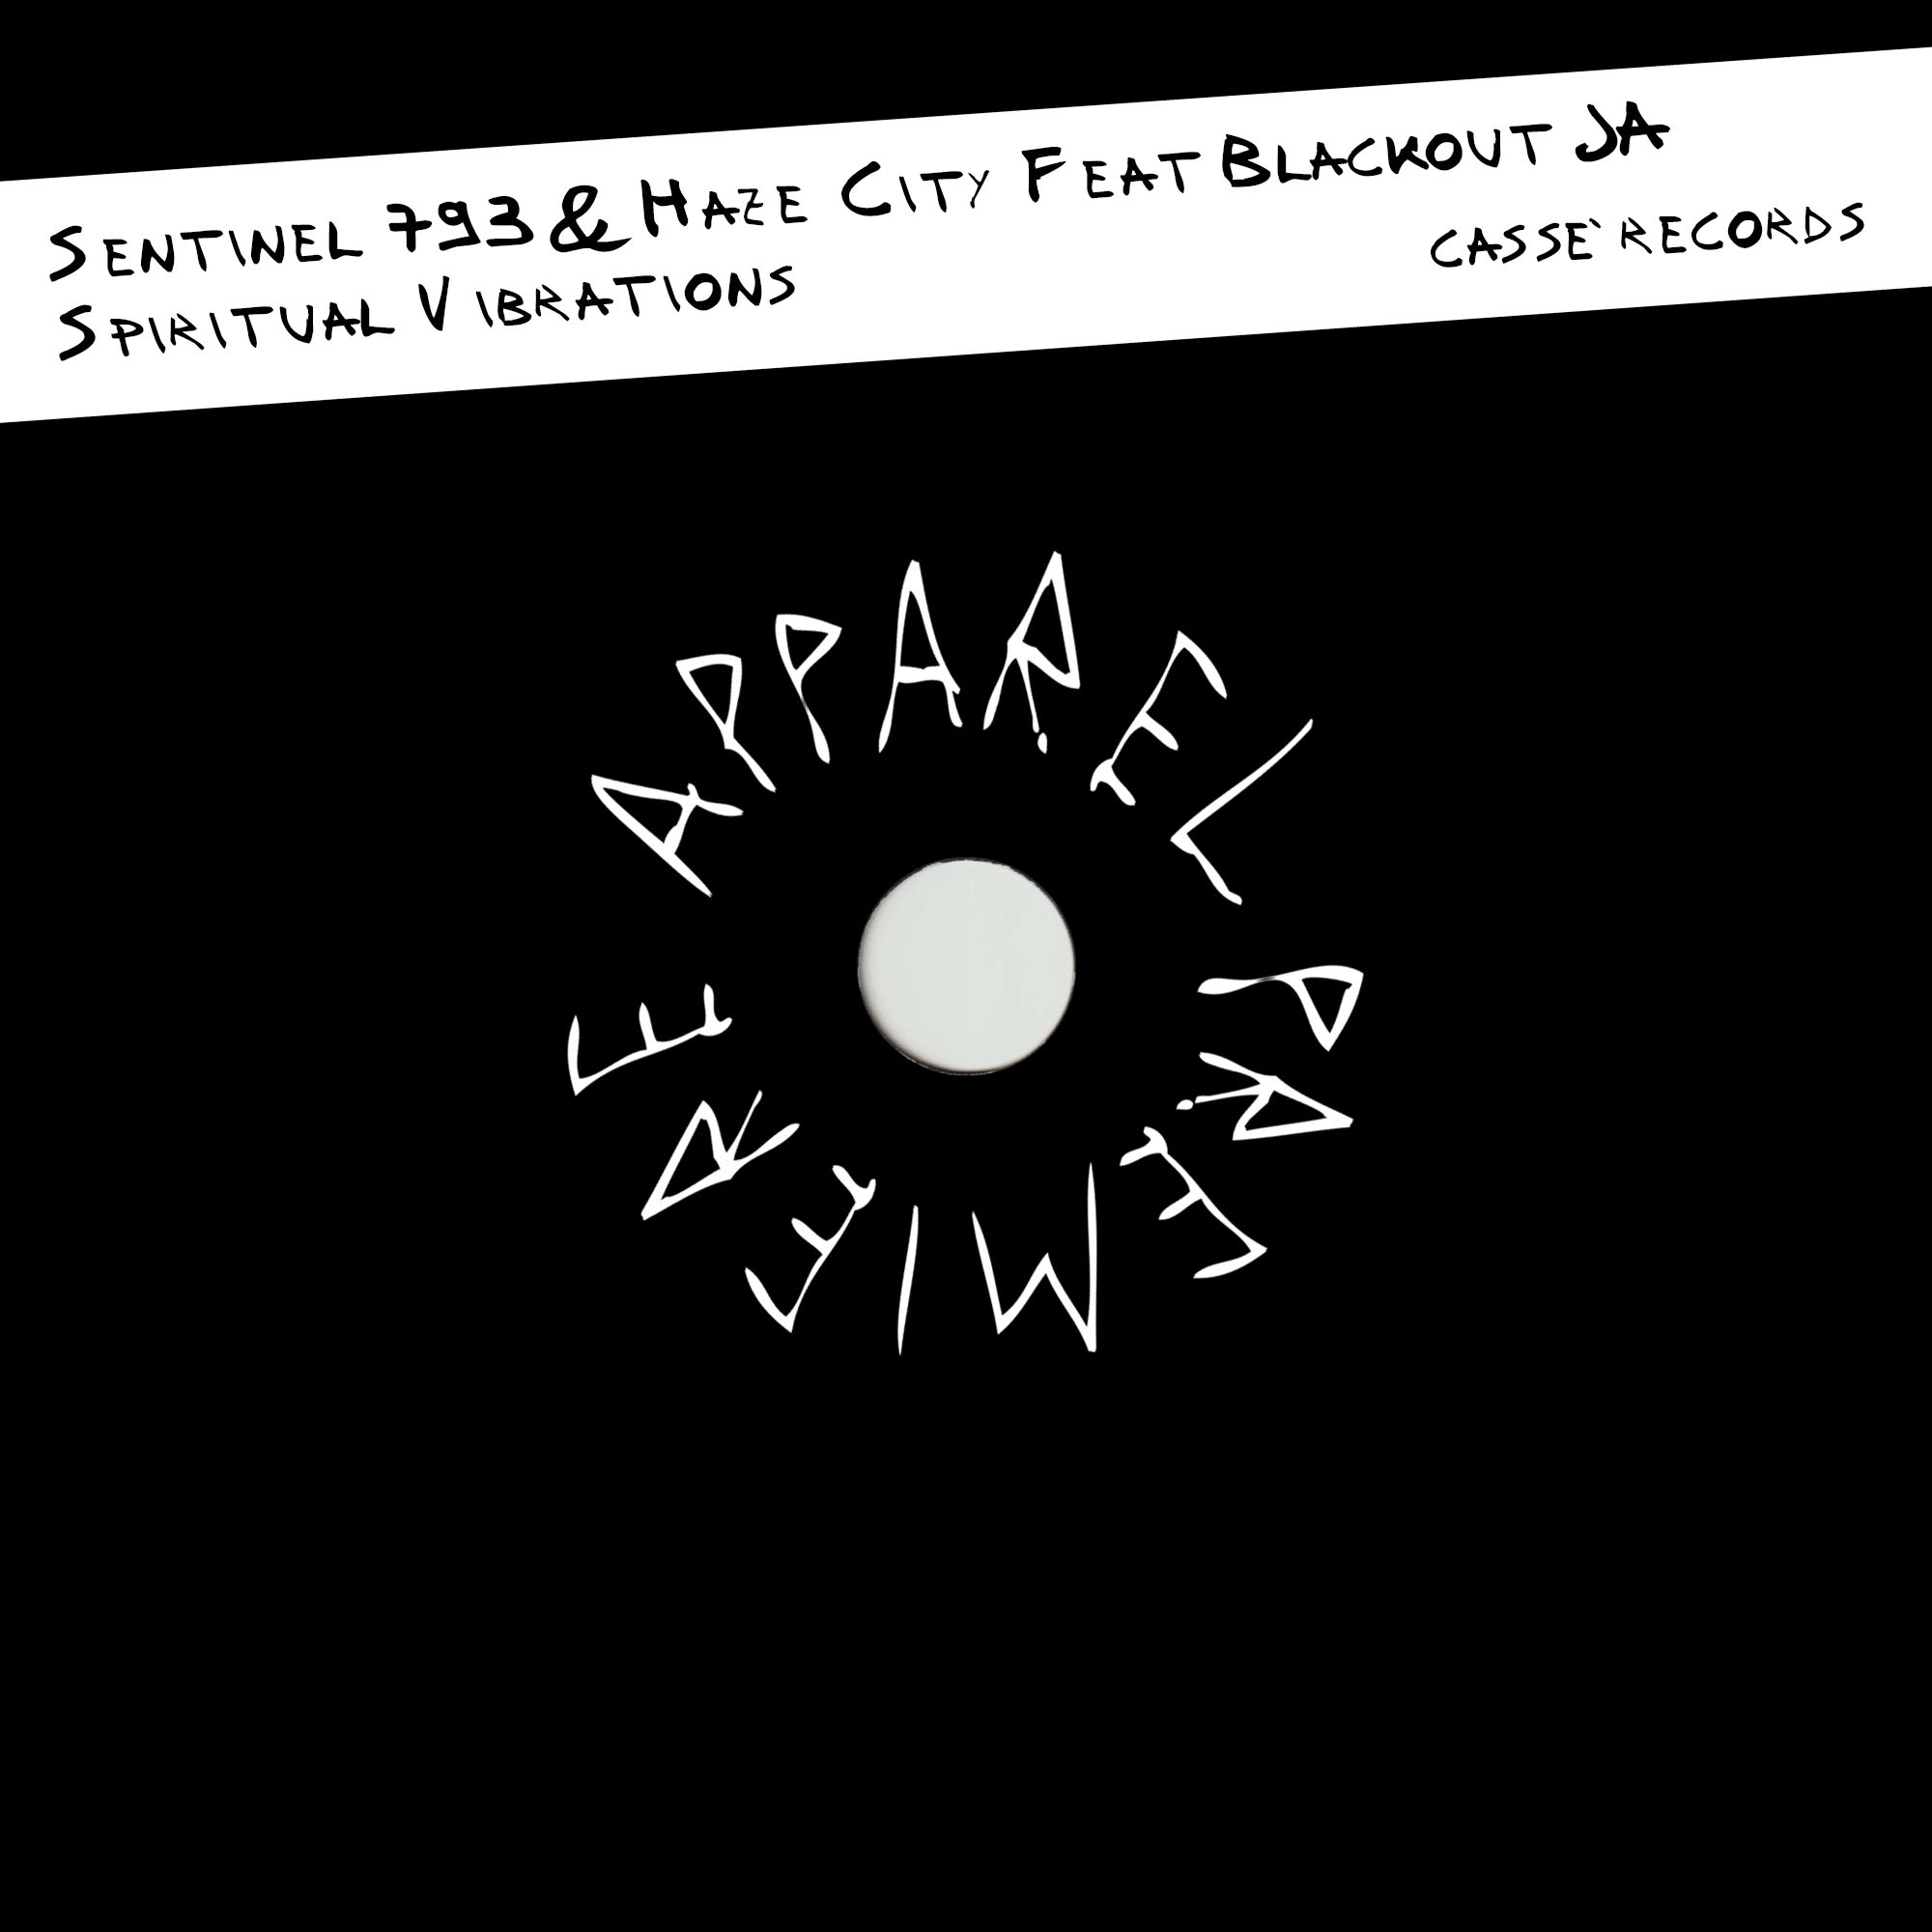 APPAREL PREMIERE Sentinel 793 & Haze City Feat Blackout JA – Spiritual Vibrations [Cassé Records]